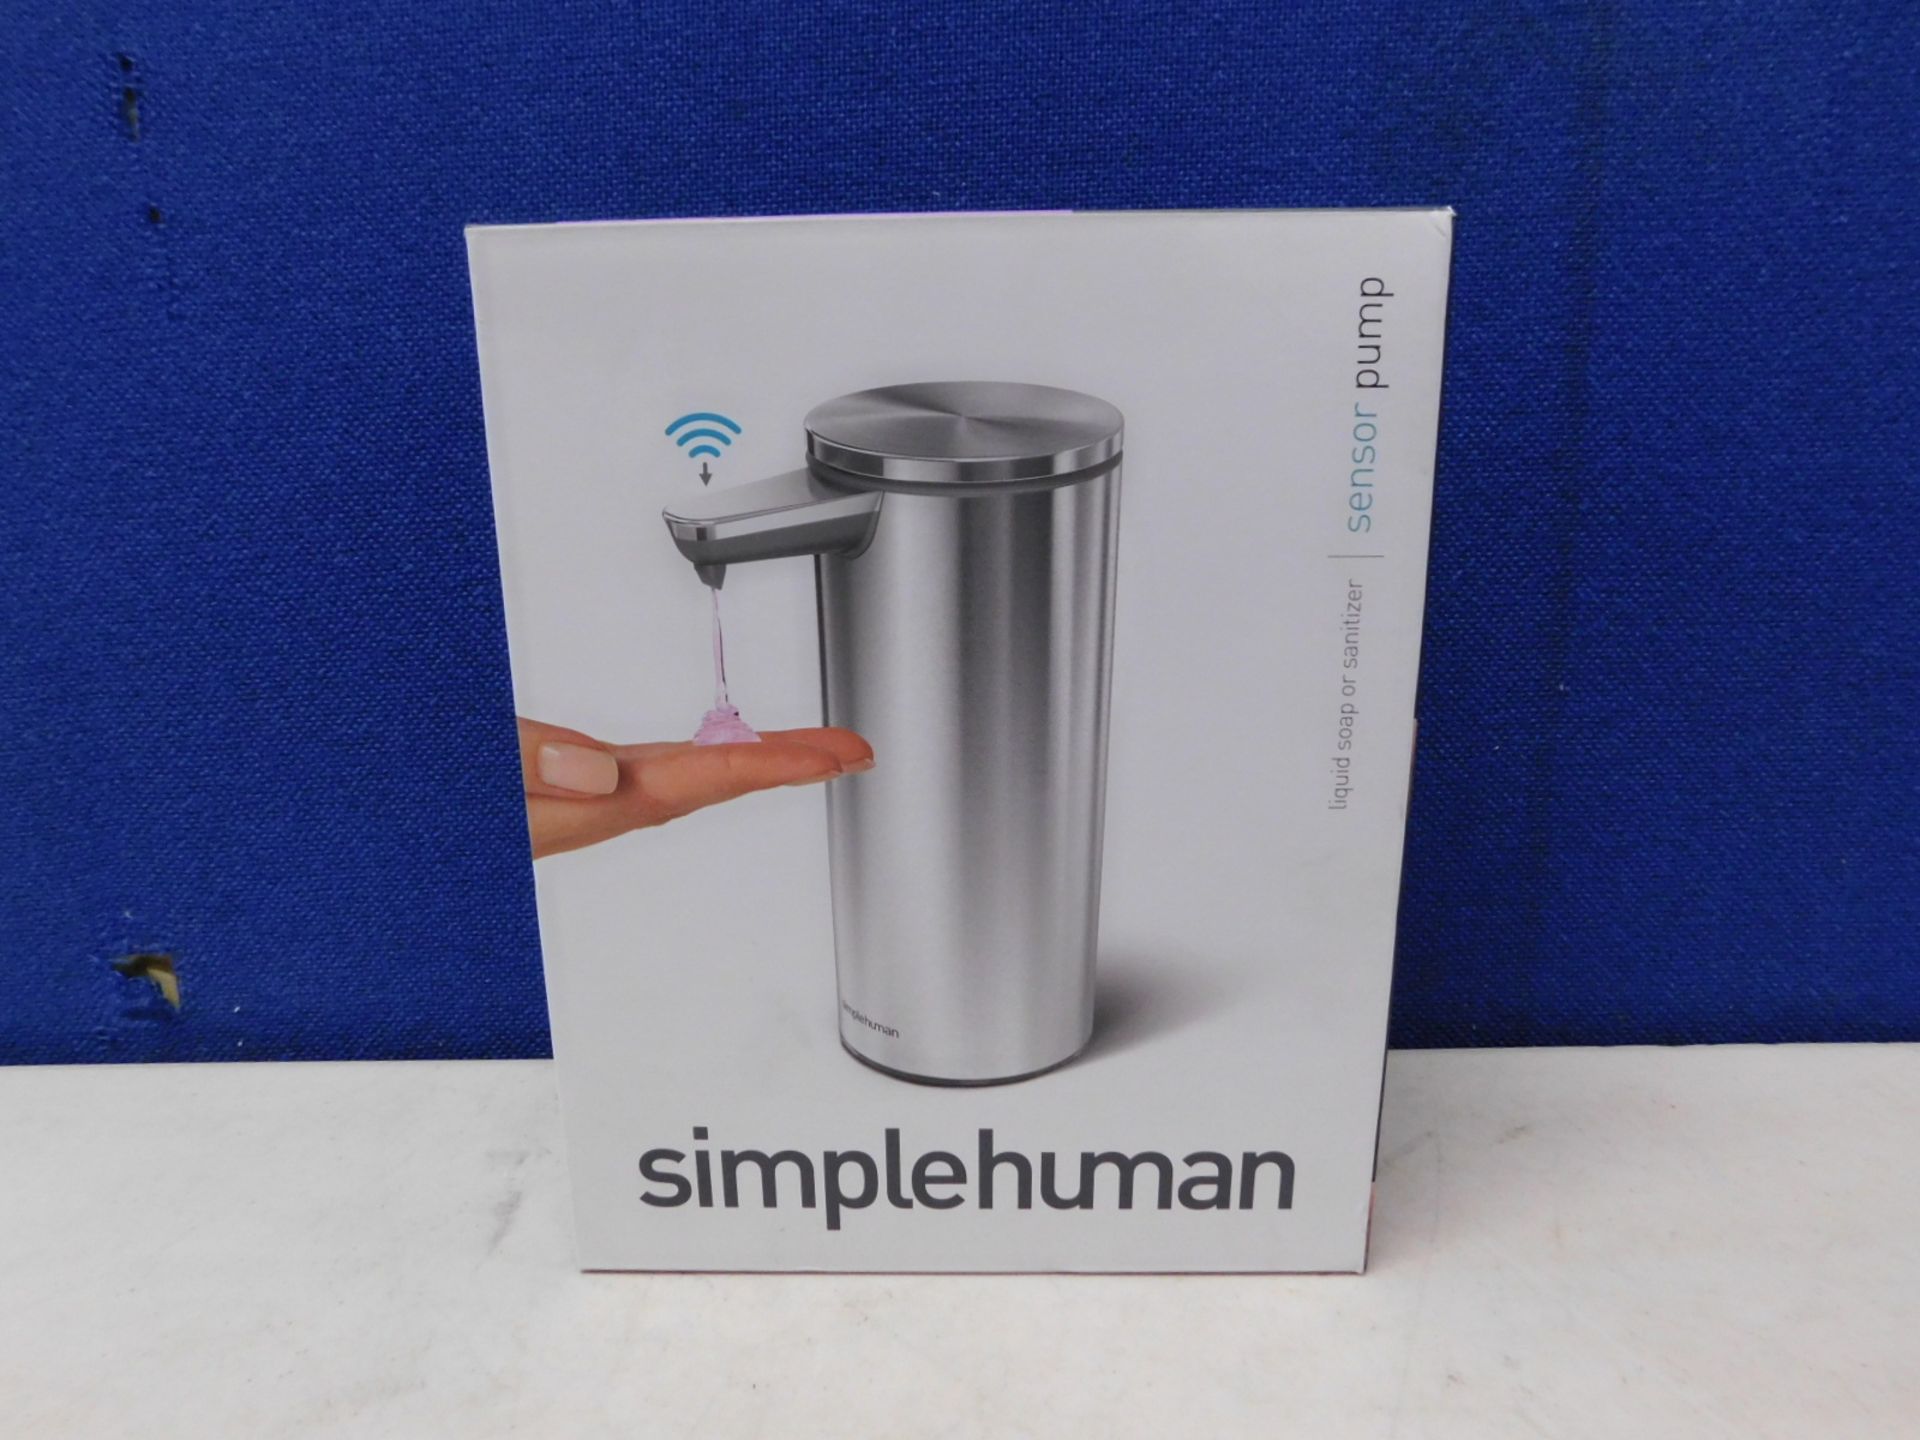 1 BOXED SIMPLE HUMAN SENSOR PUMP SOAP DISPENSER RRP Â£44.99